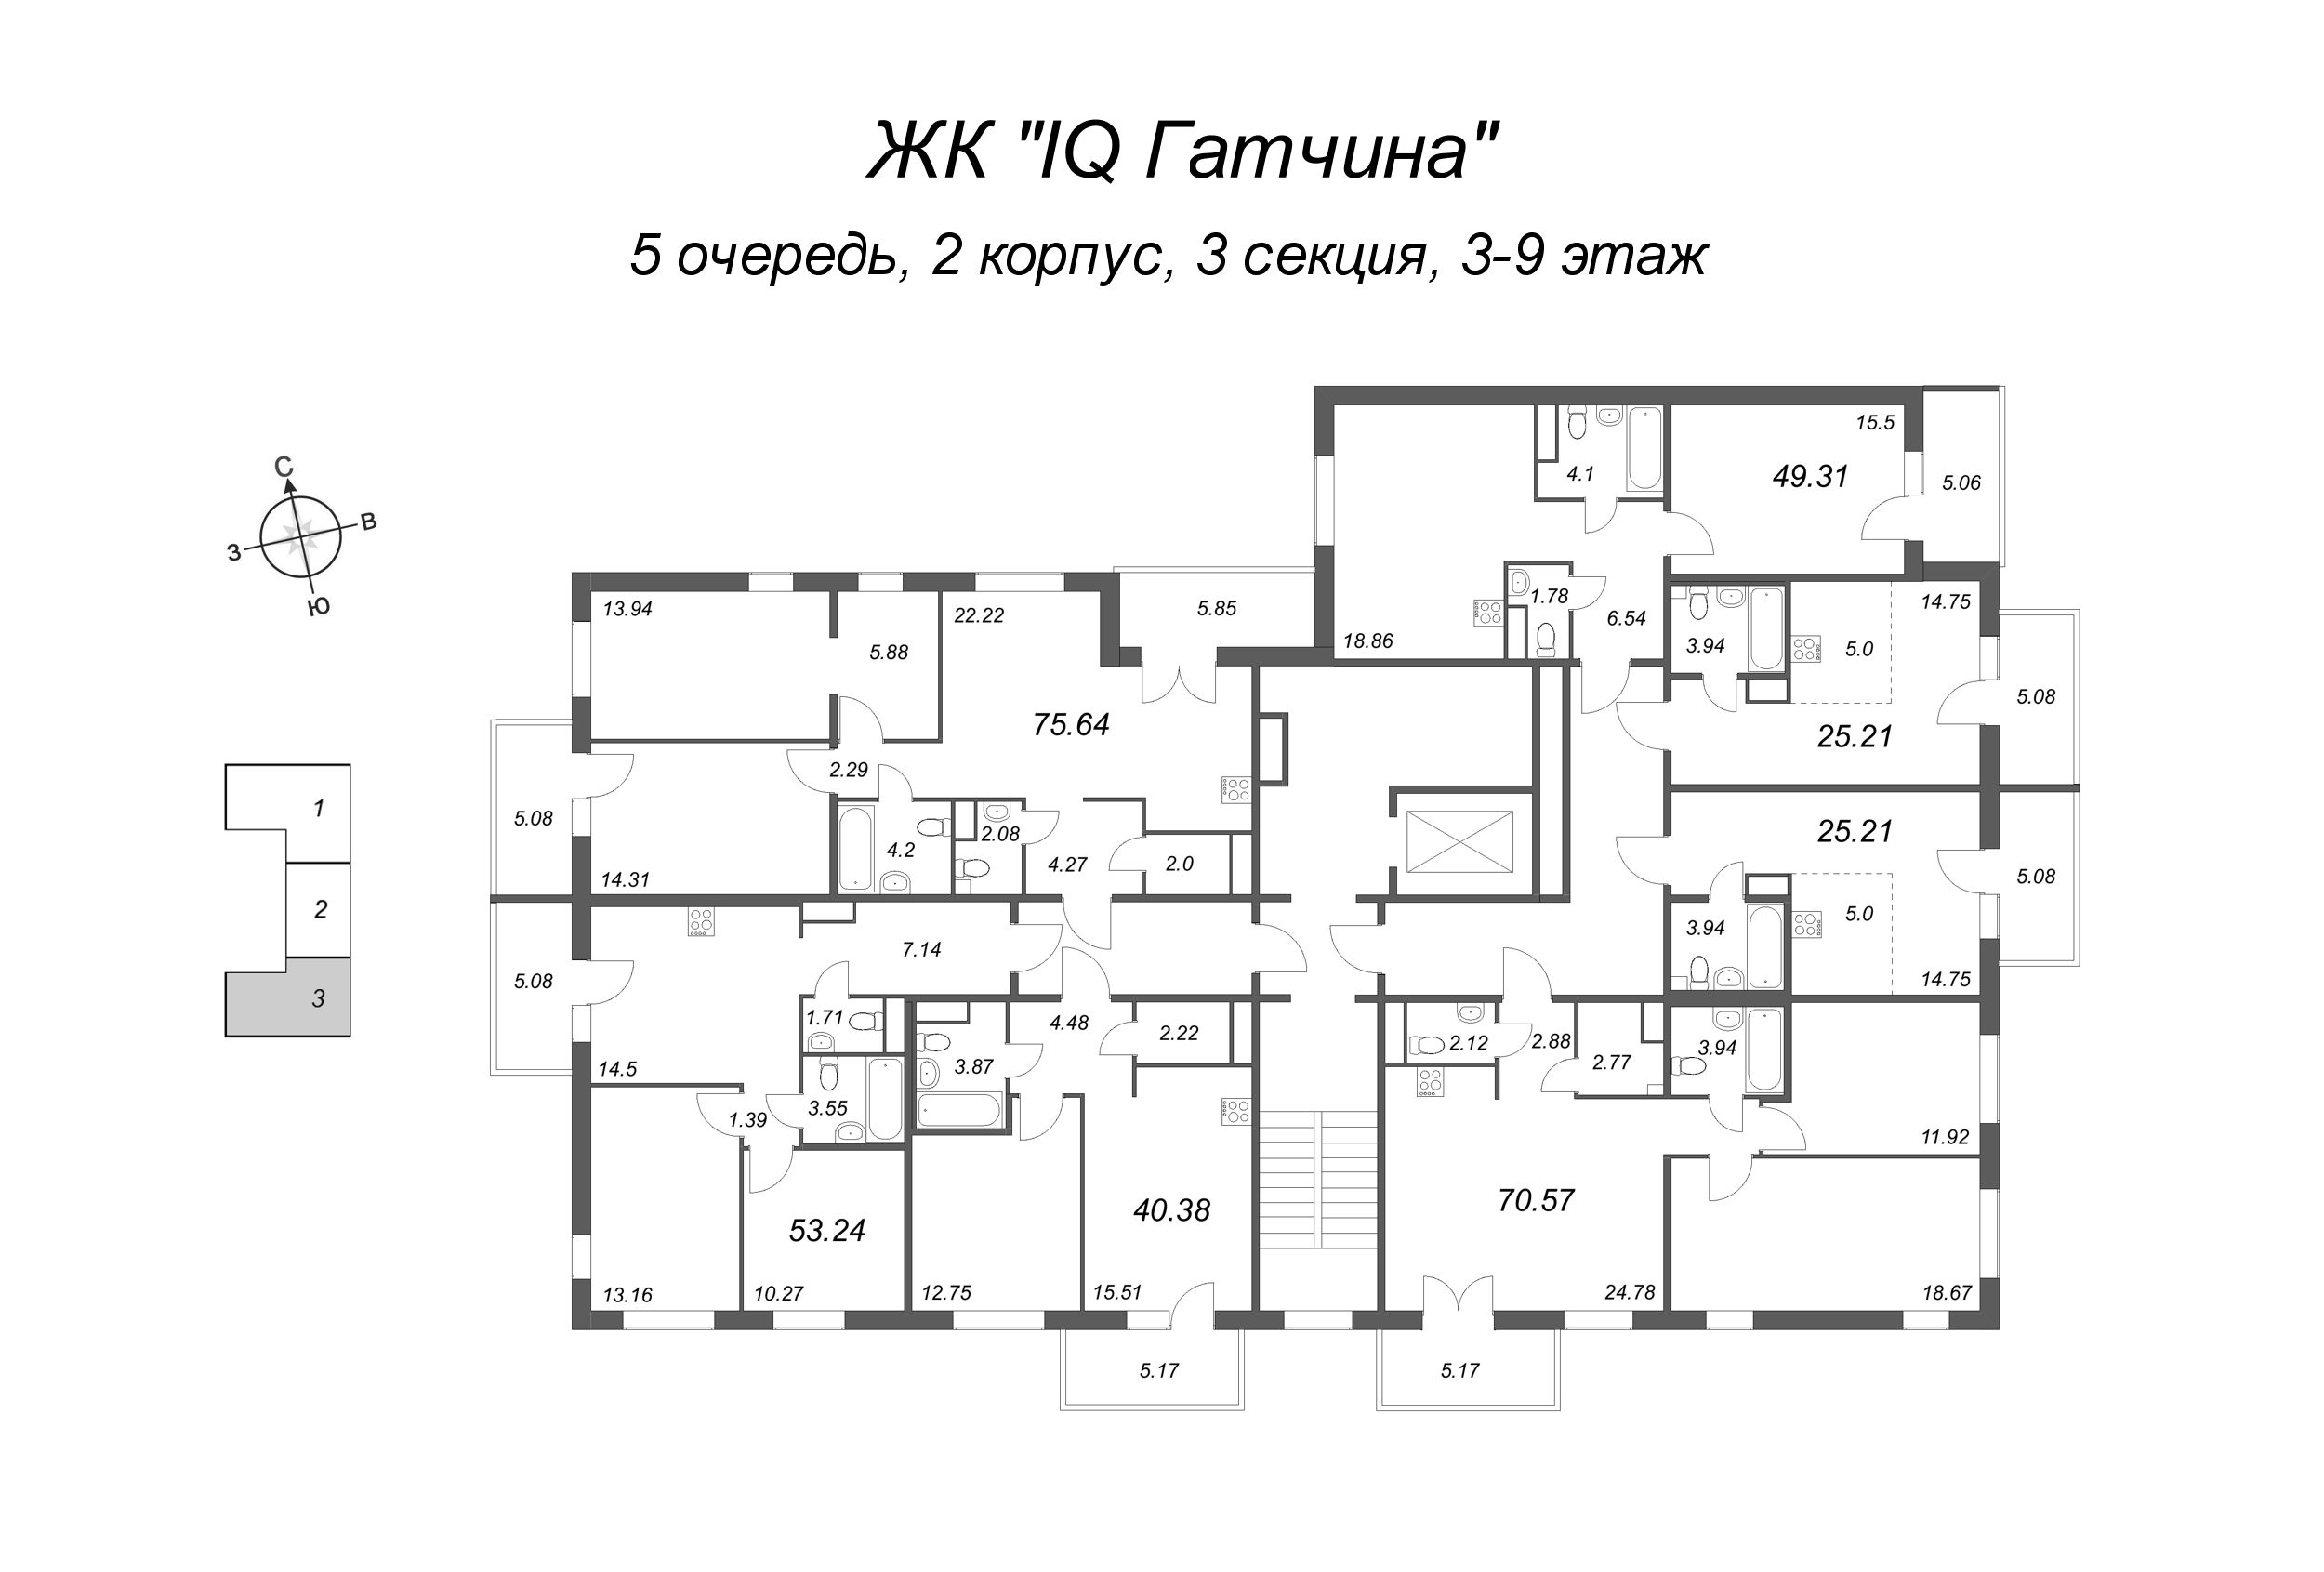 2-комнатная (Евро) квартира, 40.48 м² - планировка этажа